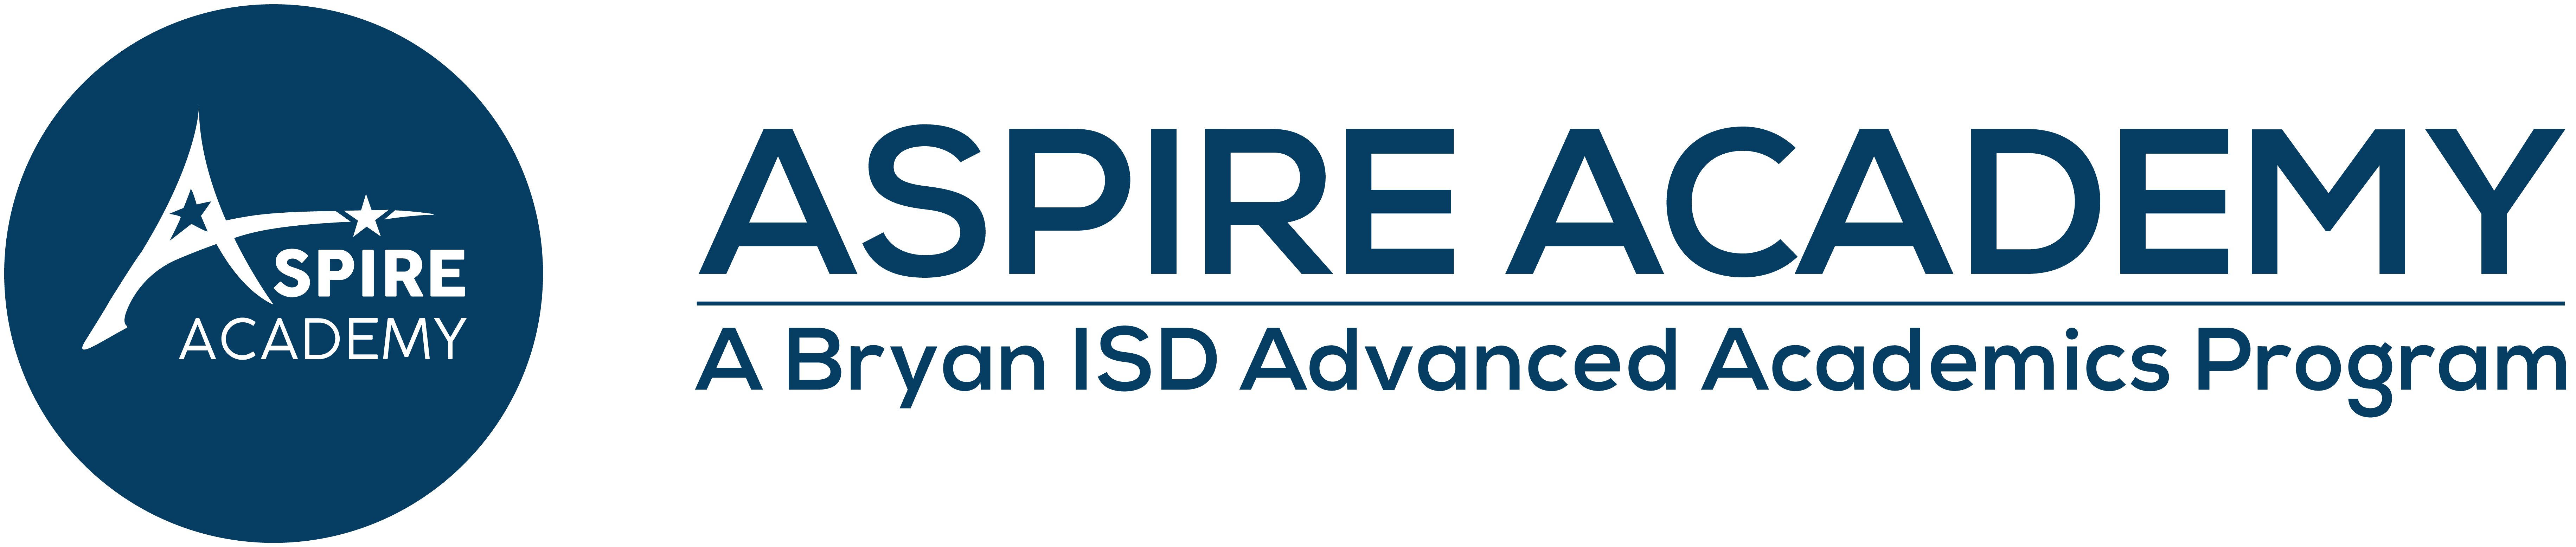 Aspire Academy | A Bryan ISD Advanced Academics Program